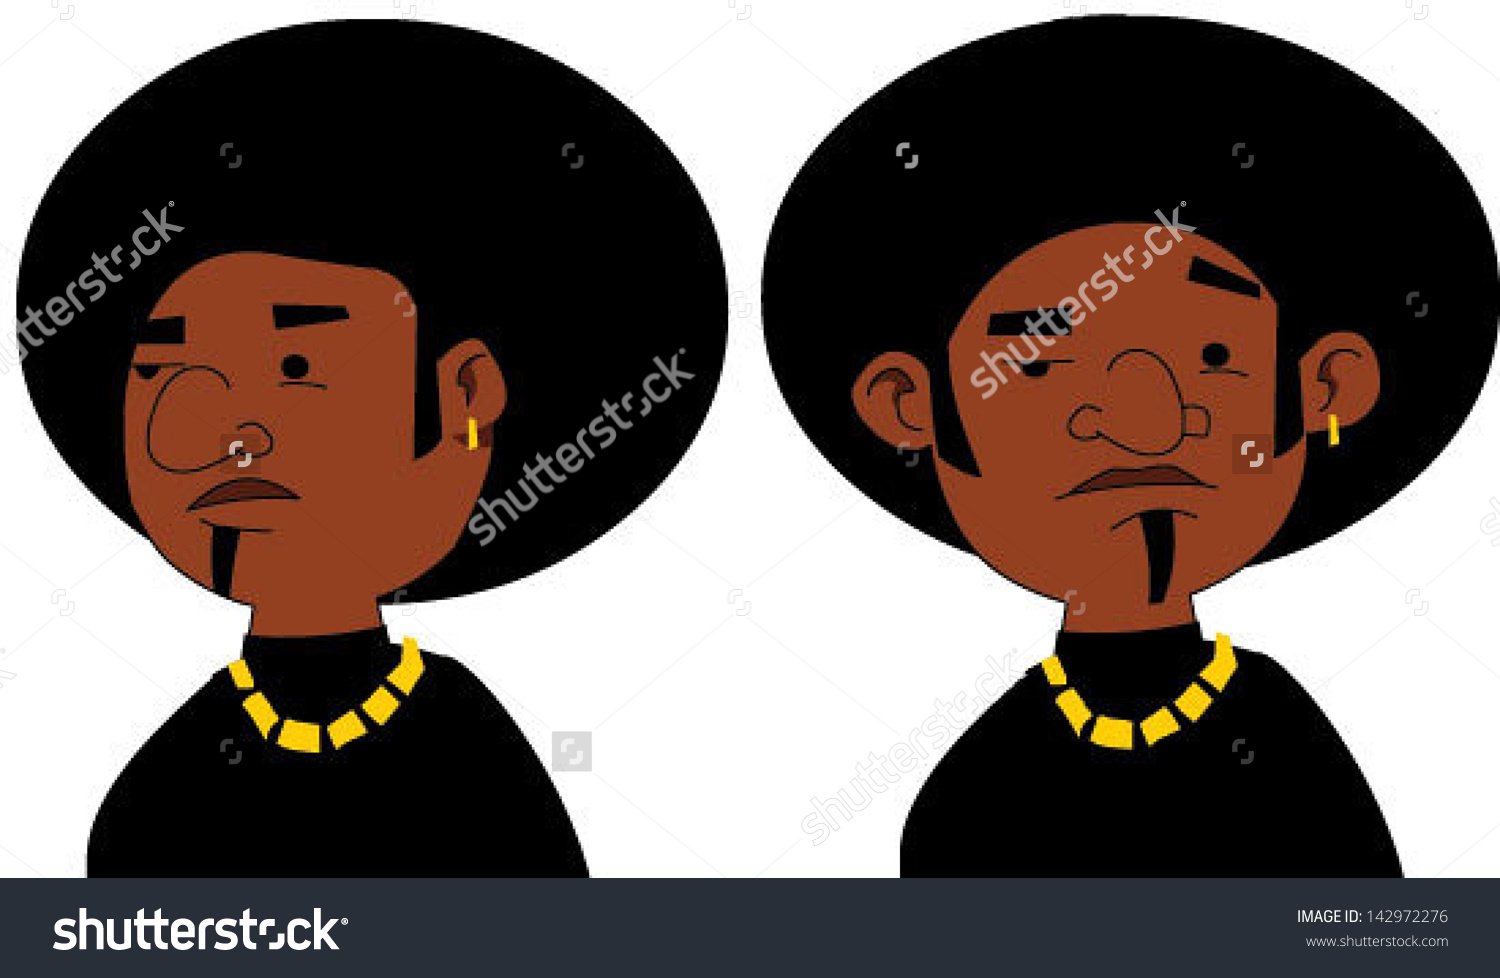 Cartoon black man with attitude - Vector clip art illustration on white background